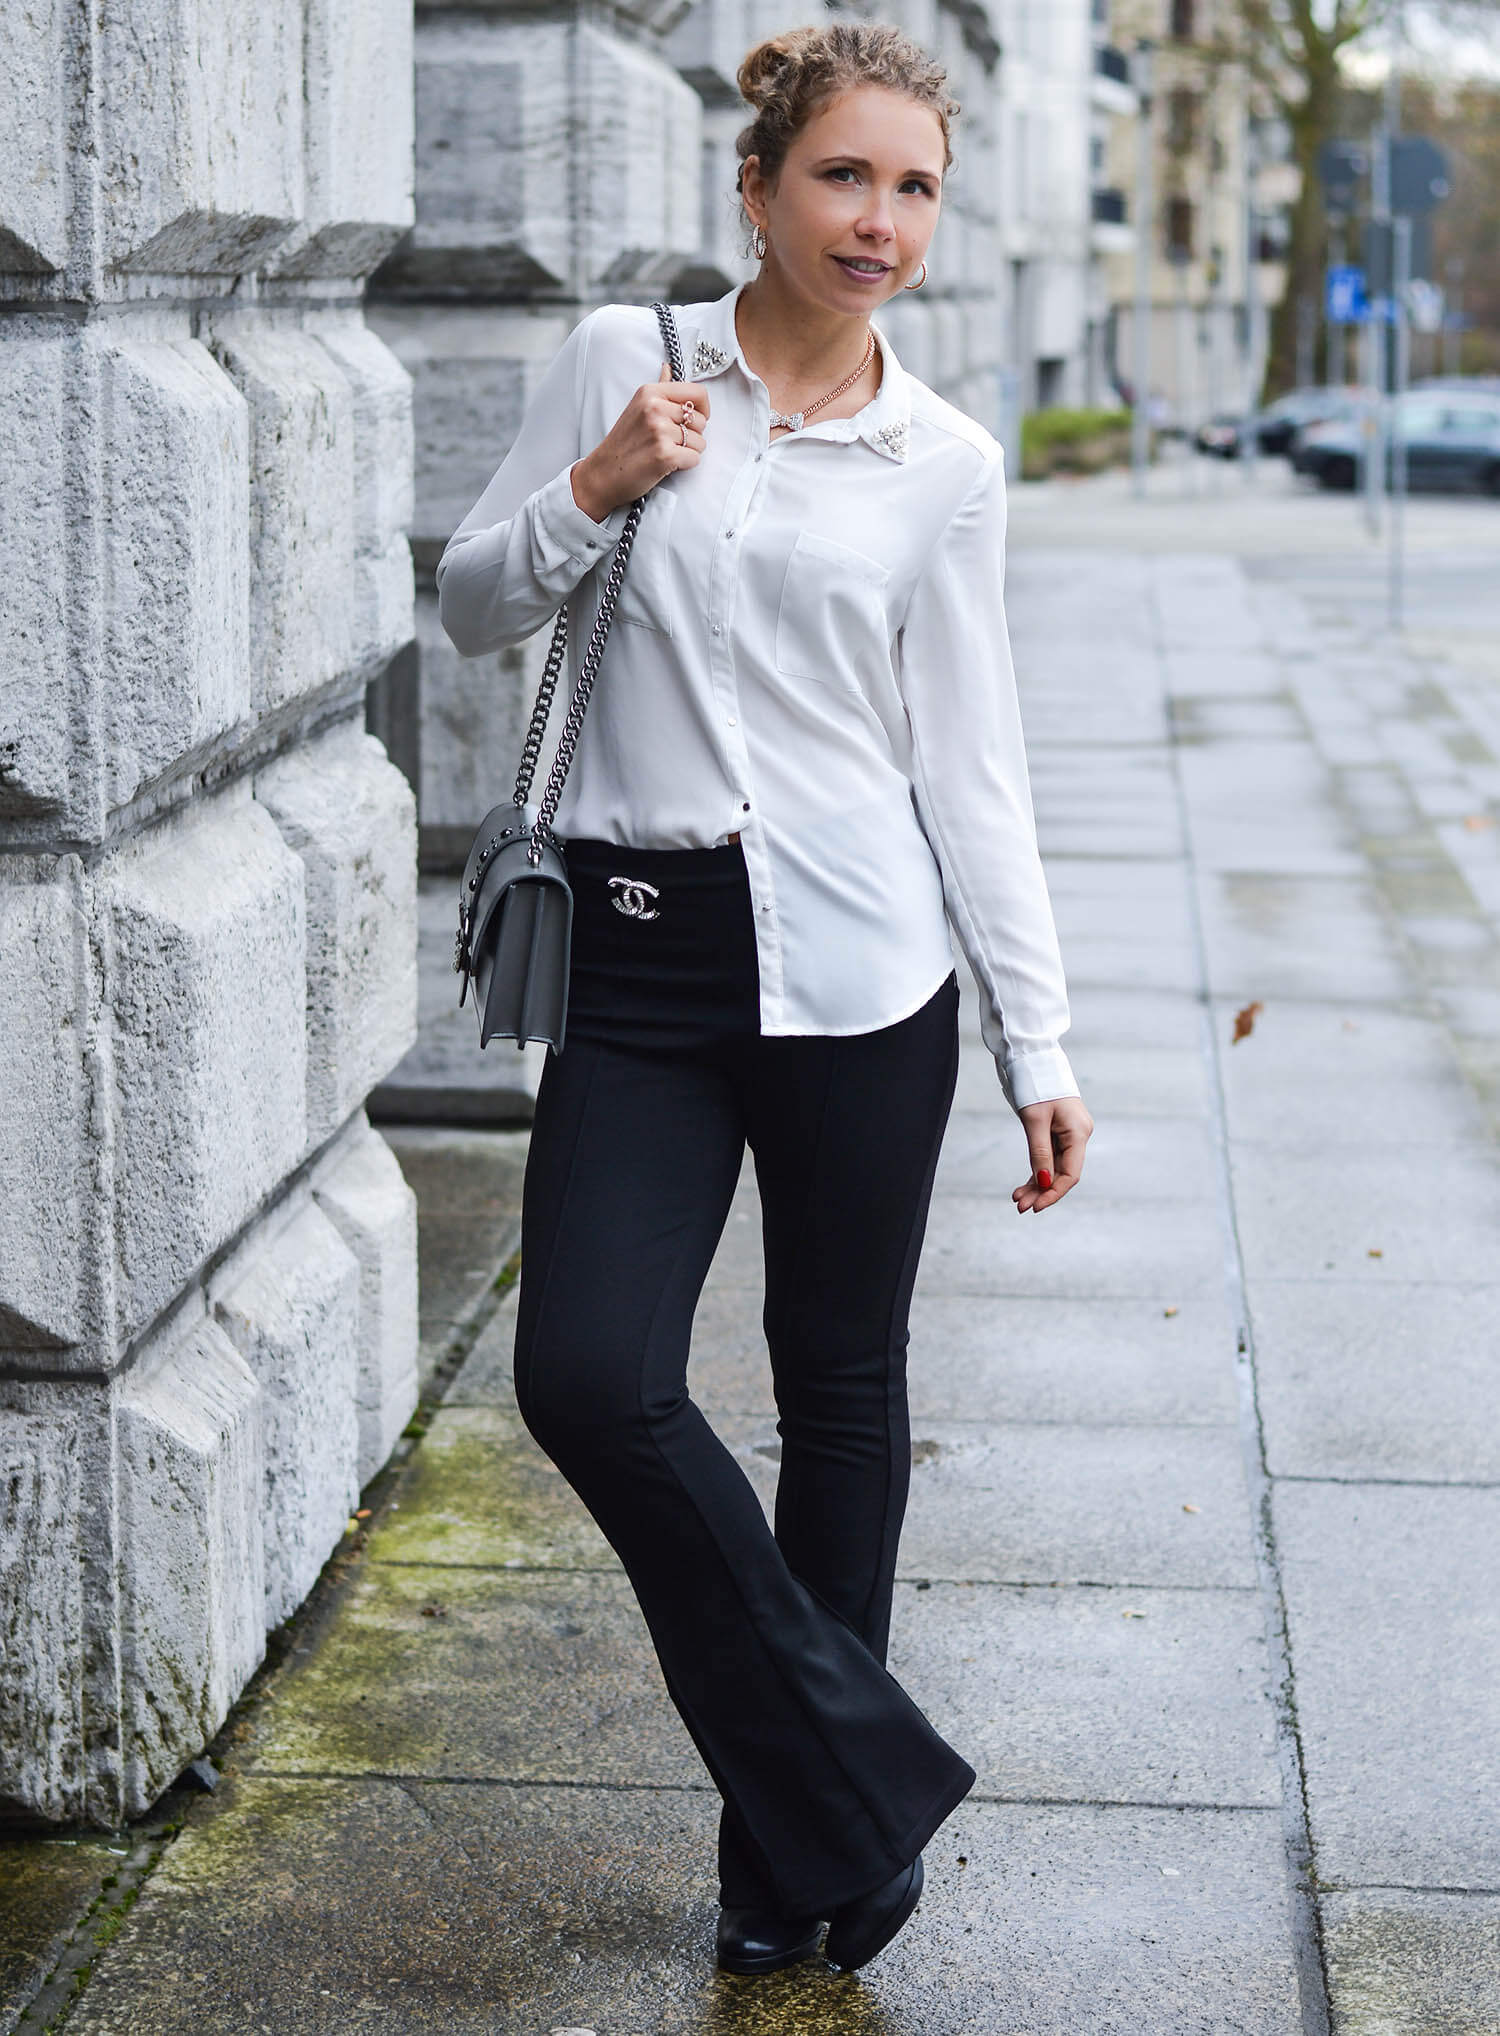 Kationette-fashionblogger-nrw-Outfit-White-Blouse-Flared-Pants-and-Pinko-Bag-blackandwhite-streetstyle